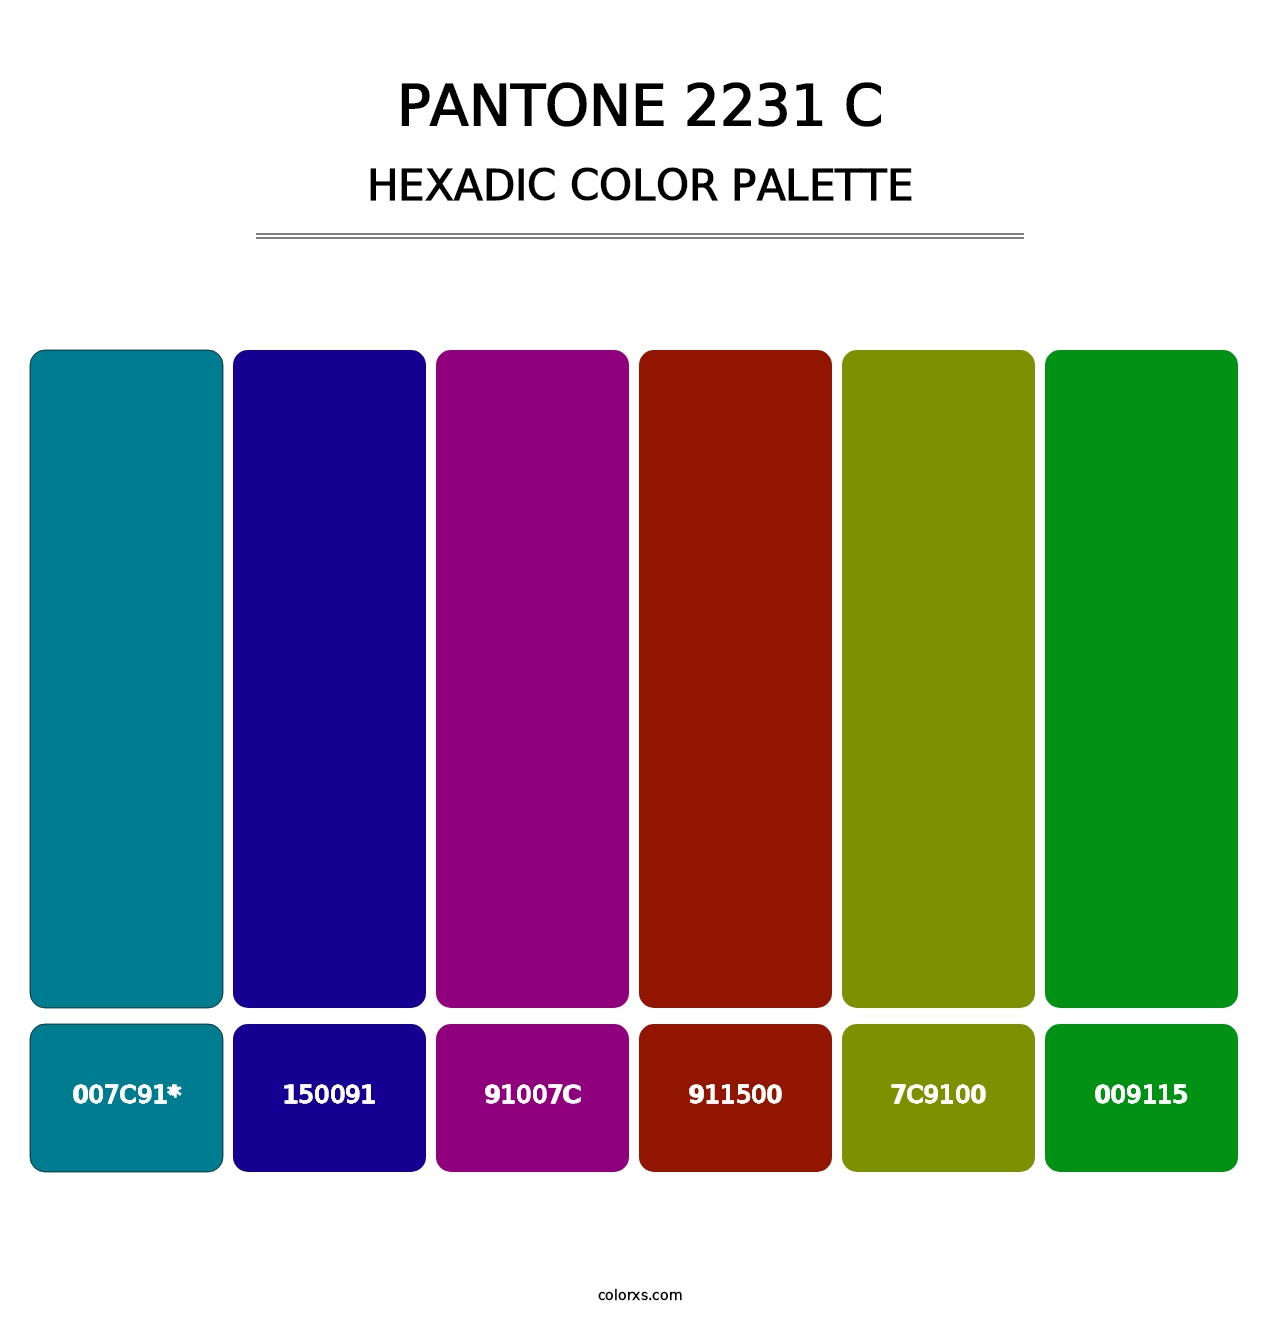 PANTONE 2231 C - Hexadic Color Palette